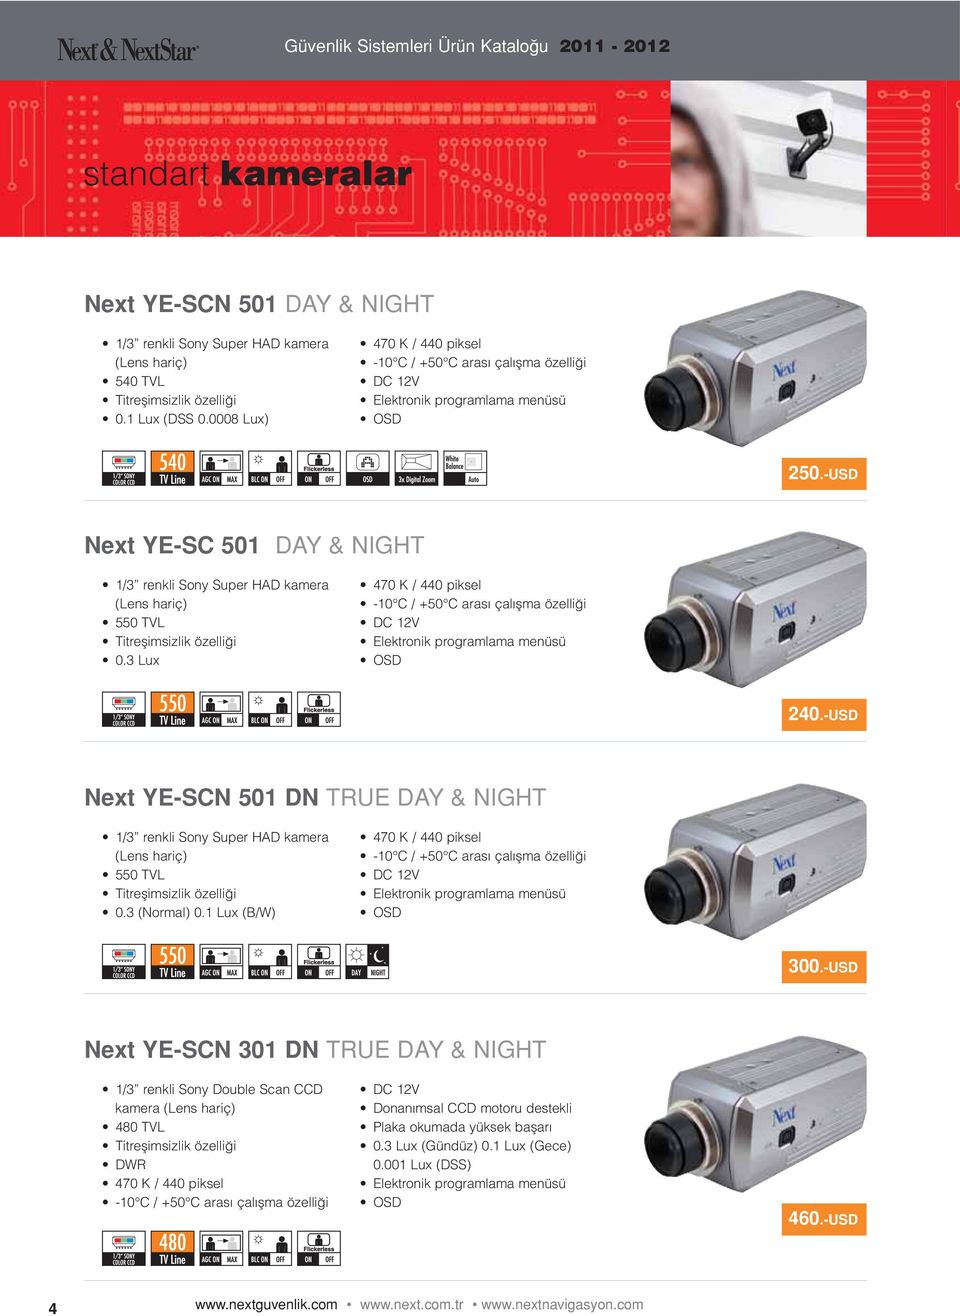 3 Lux 470 K / 440 piksel Elektronik programlama menüsü OSD 240.-USD Next YE-SCN 501 DN TRUE DAY & NIGHT 1/3 renkli Sony Super HAD kamera (Lens hariç) 550 TVL Titreşimsizlik özelliği 0.3 (Normal) 0.